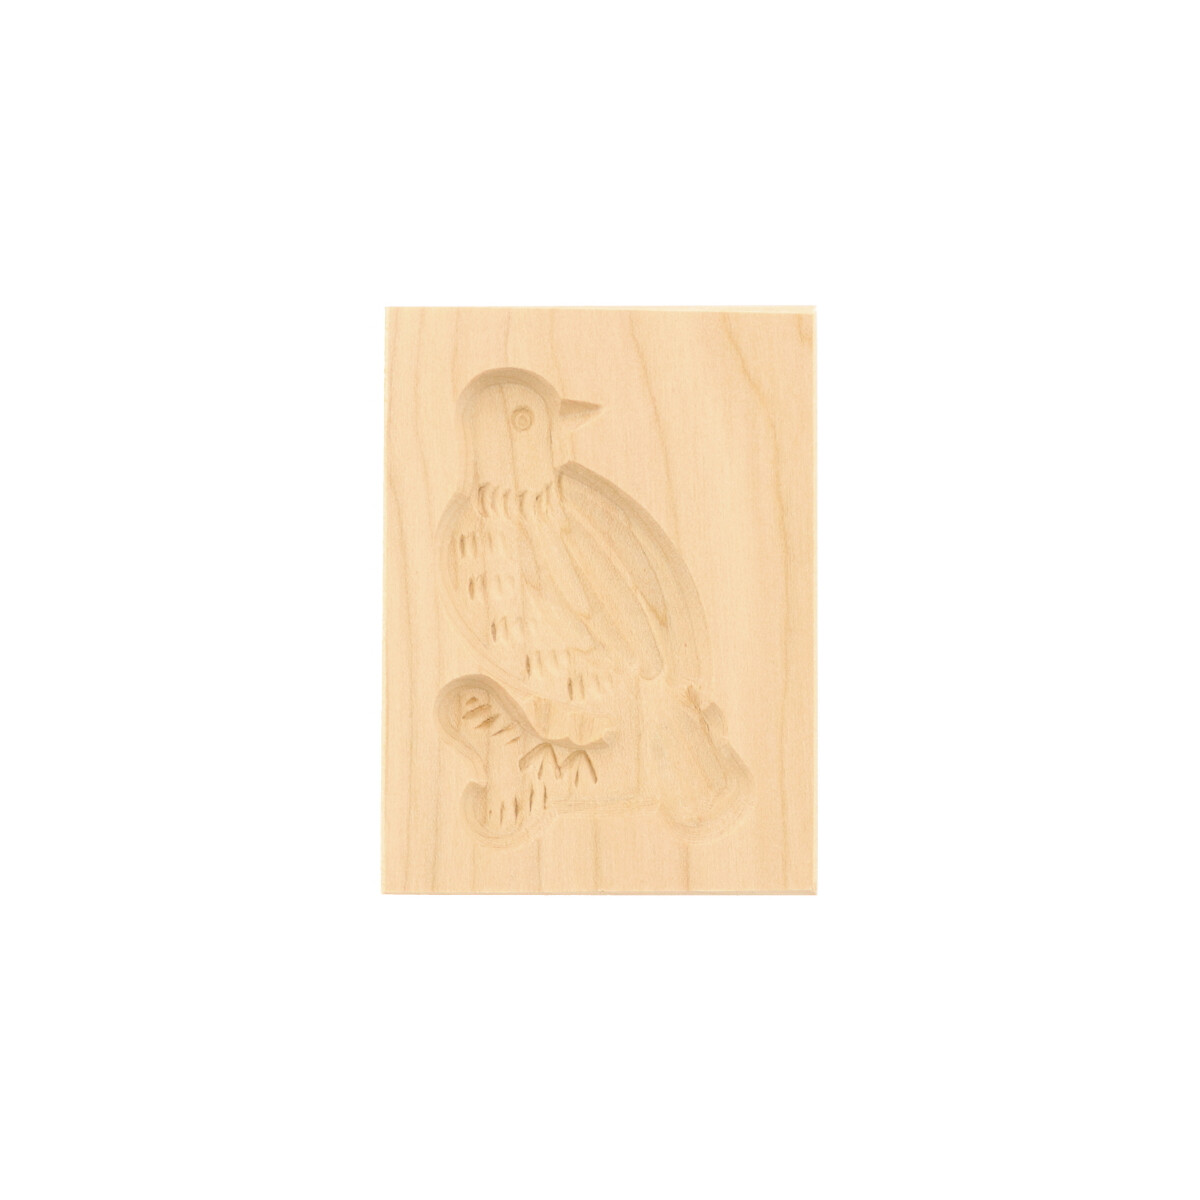 Spekulatiusform, 1 Bild, Vogel aus Holz 8 cm